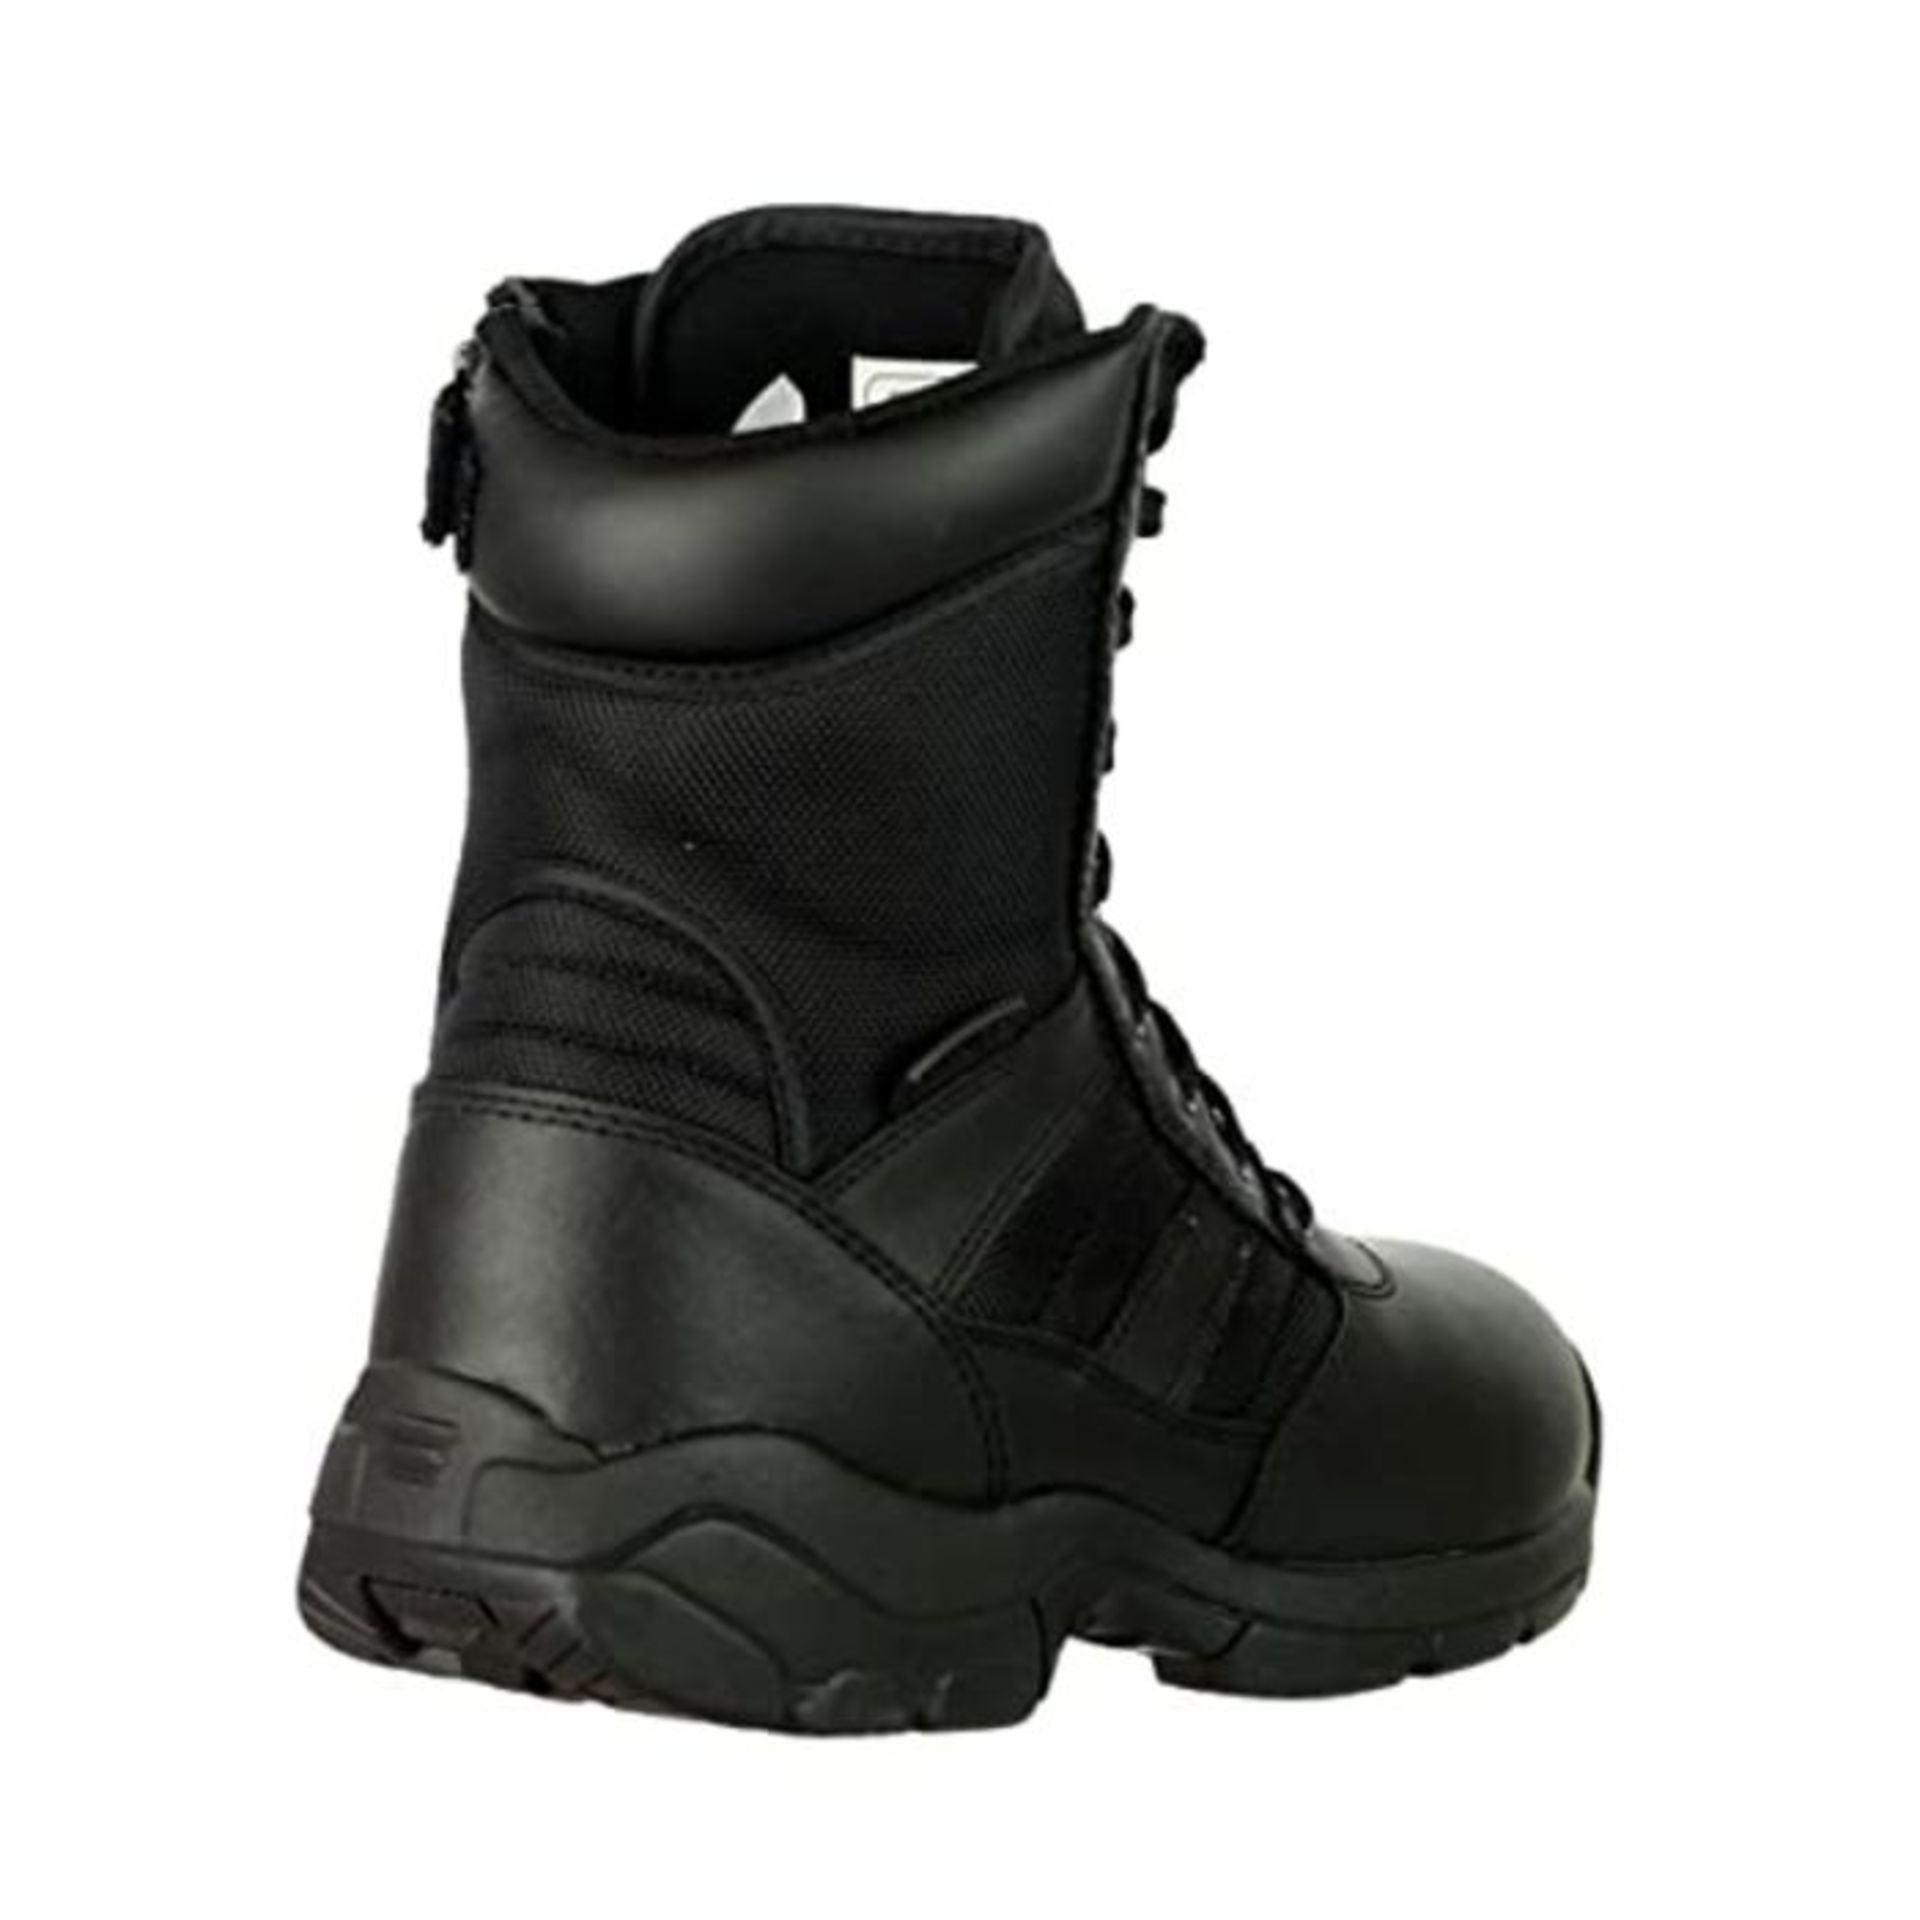 RRP £69.00 Magnum M800339-021 Panther 8 Side Boots,Black, 9 uk